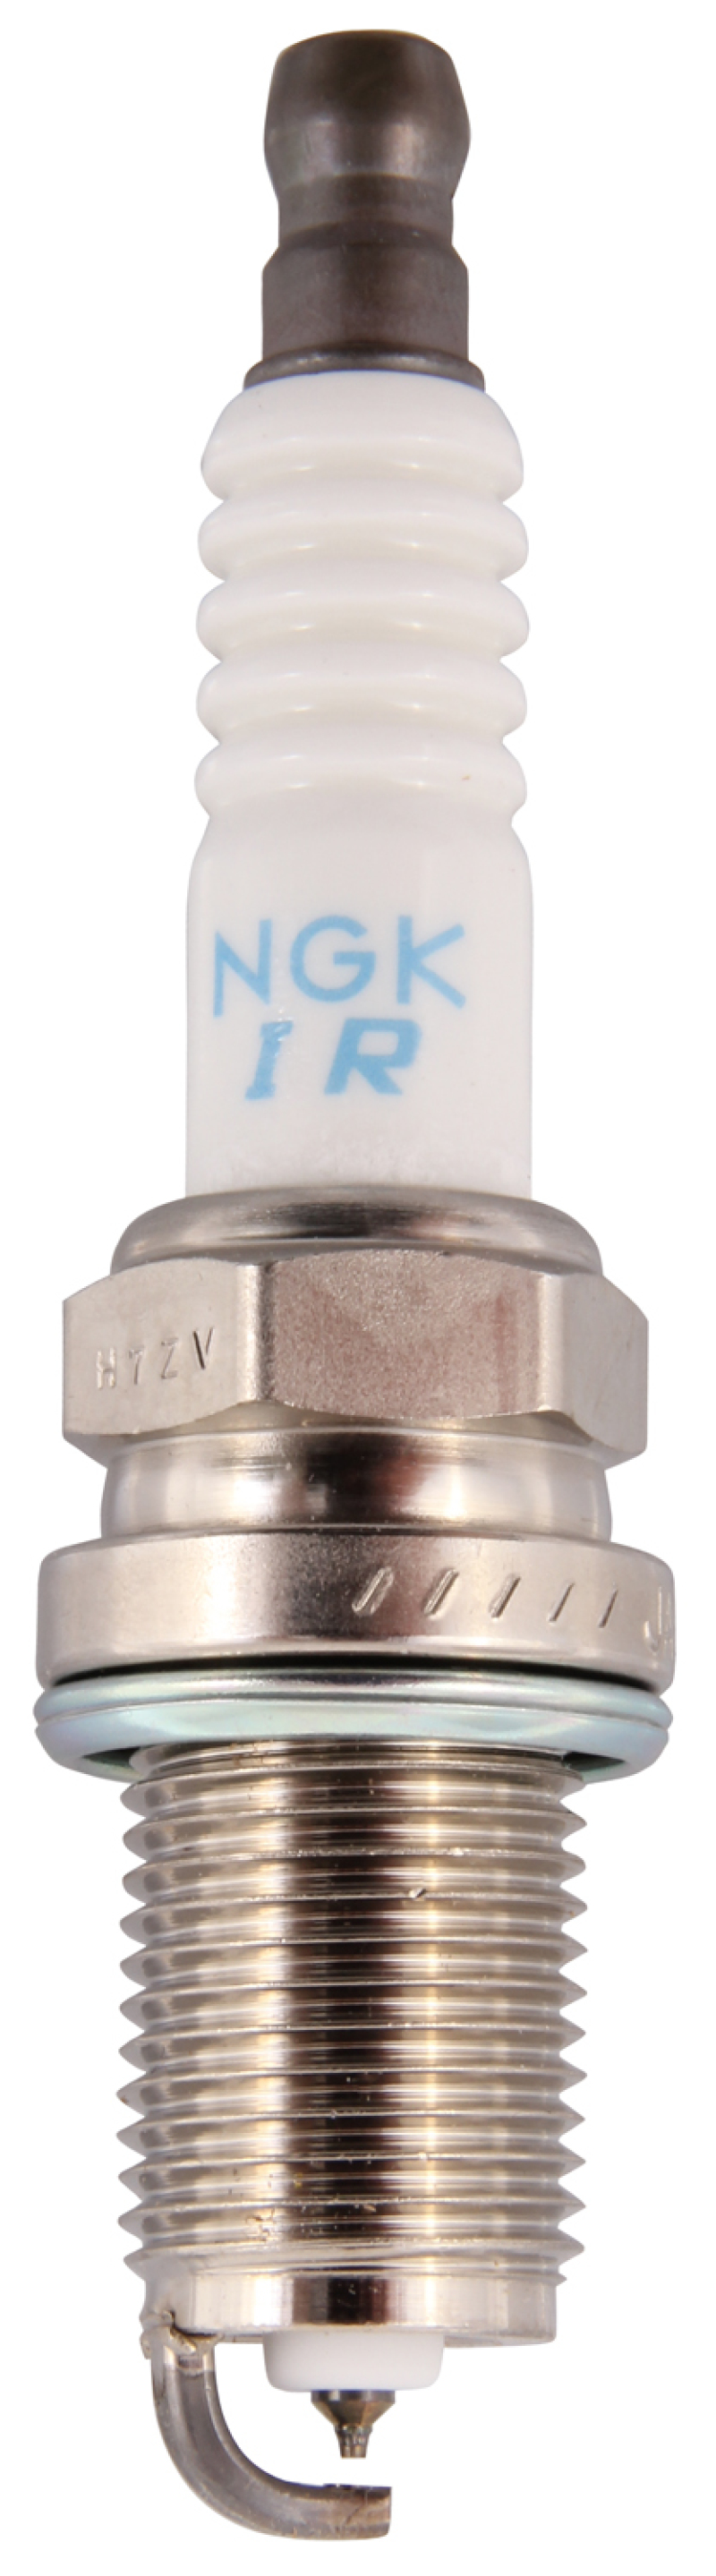 NGK Laser Iridium Spark Plug Box of 4 (IFR6F8DN) - 96416